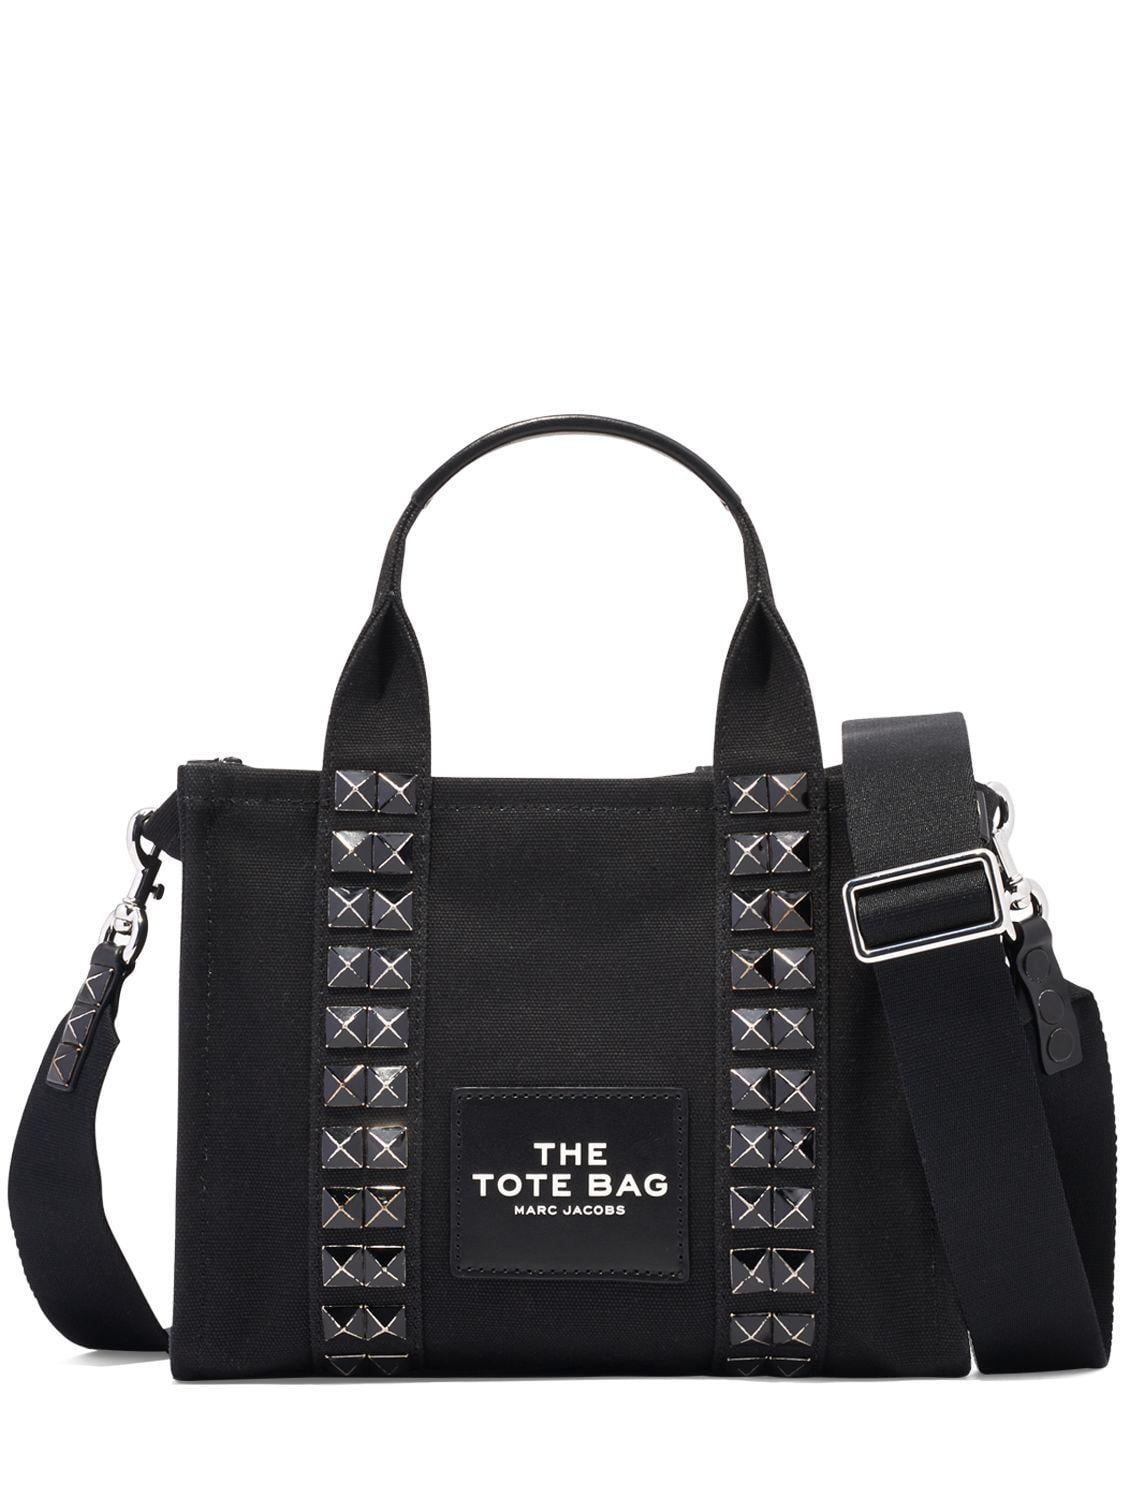 Marc Jacobs The Leather Mini Tote Bag Black, Tote